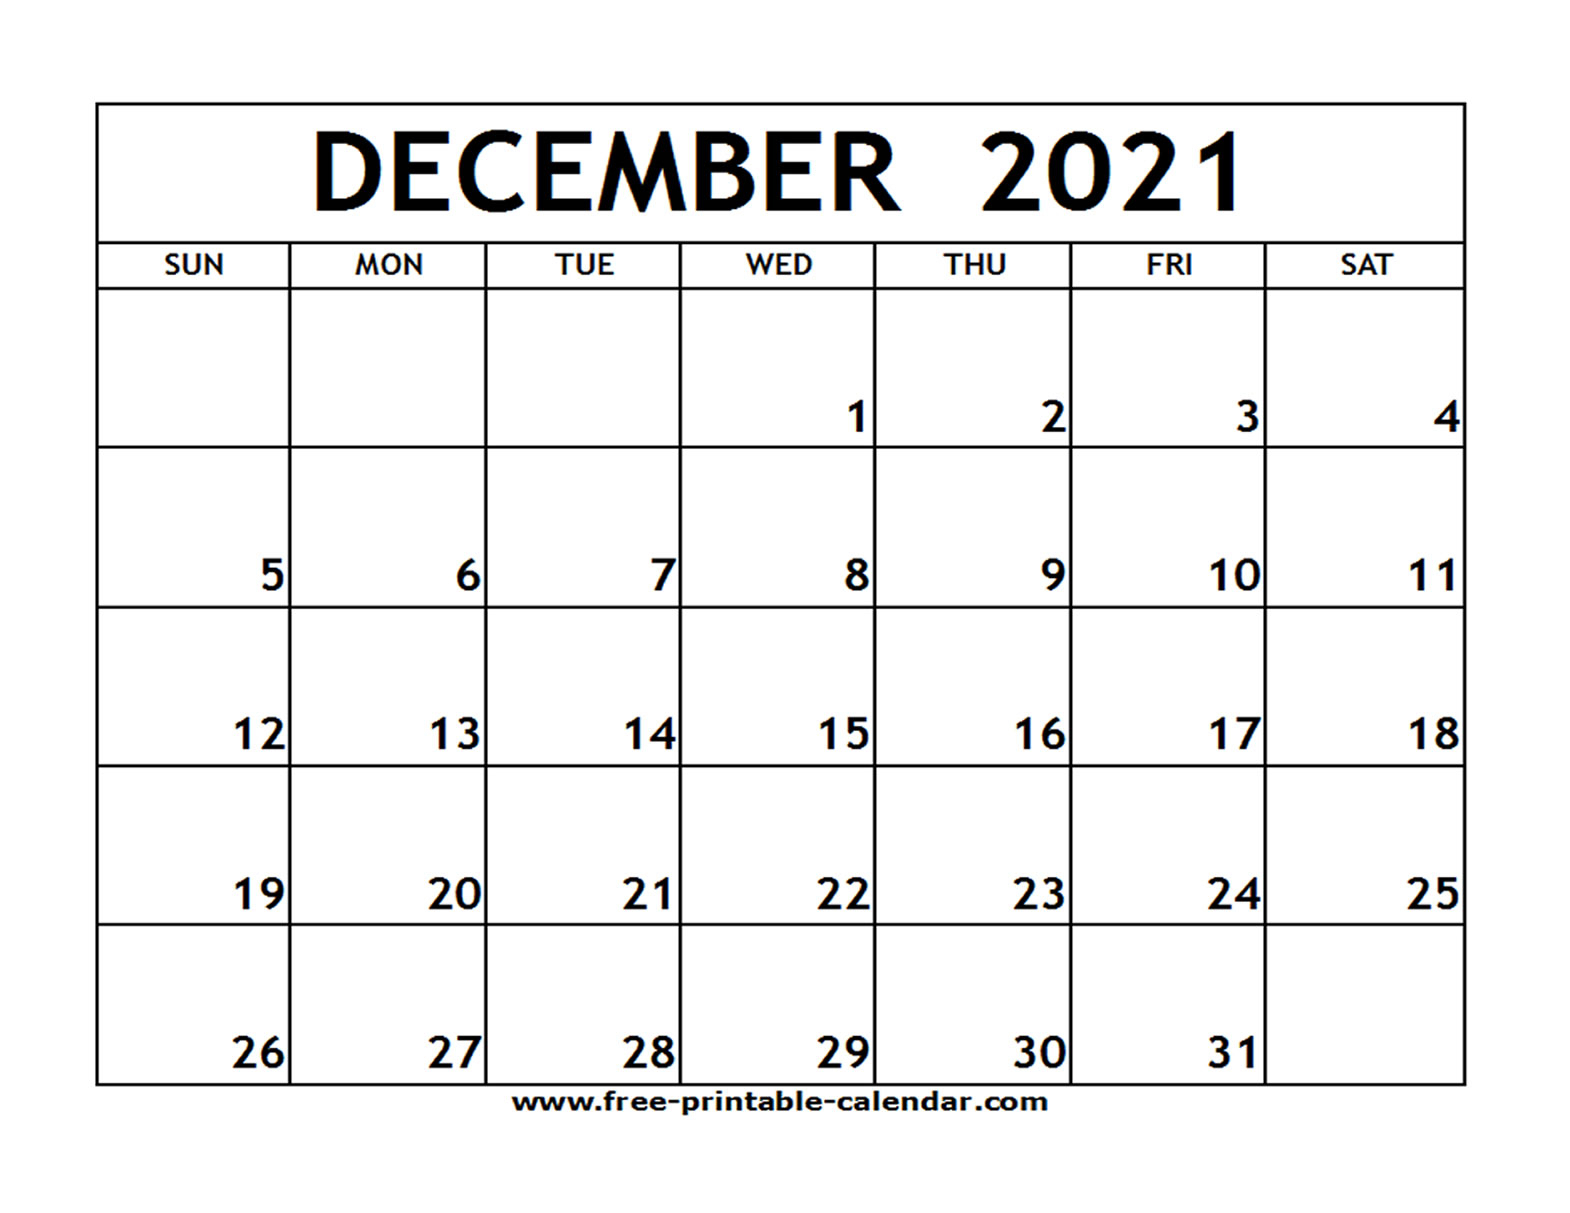 Dec 2021 Printable Calendar | Free Printable Calendar